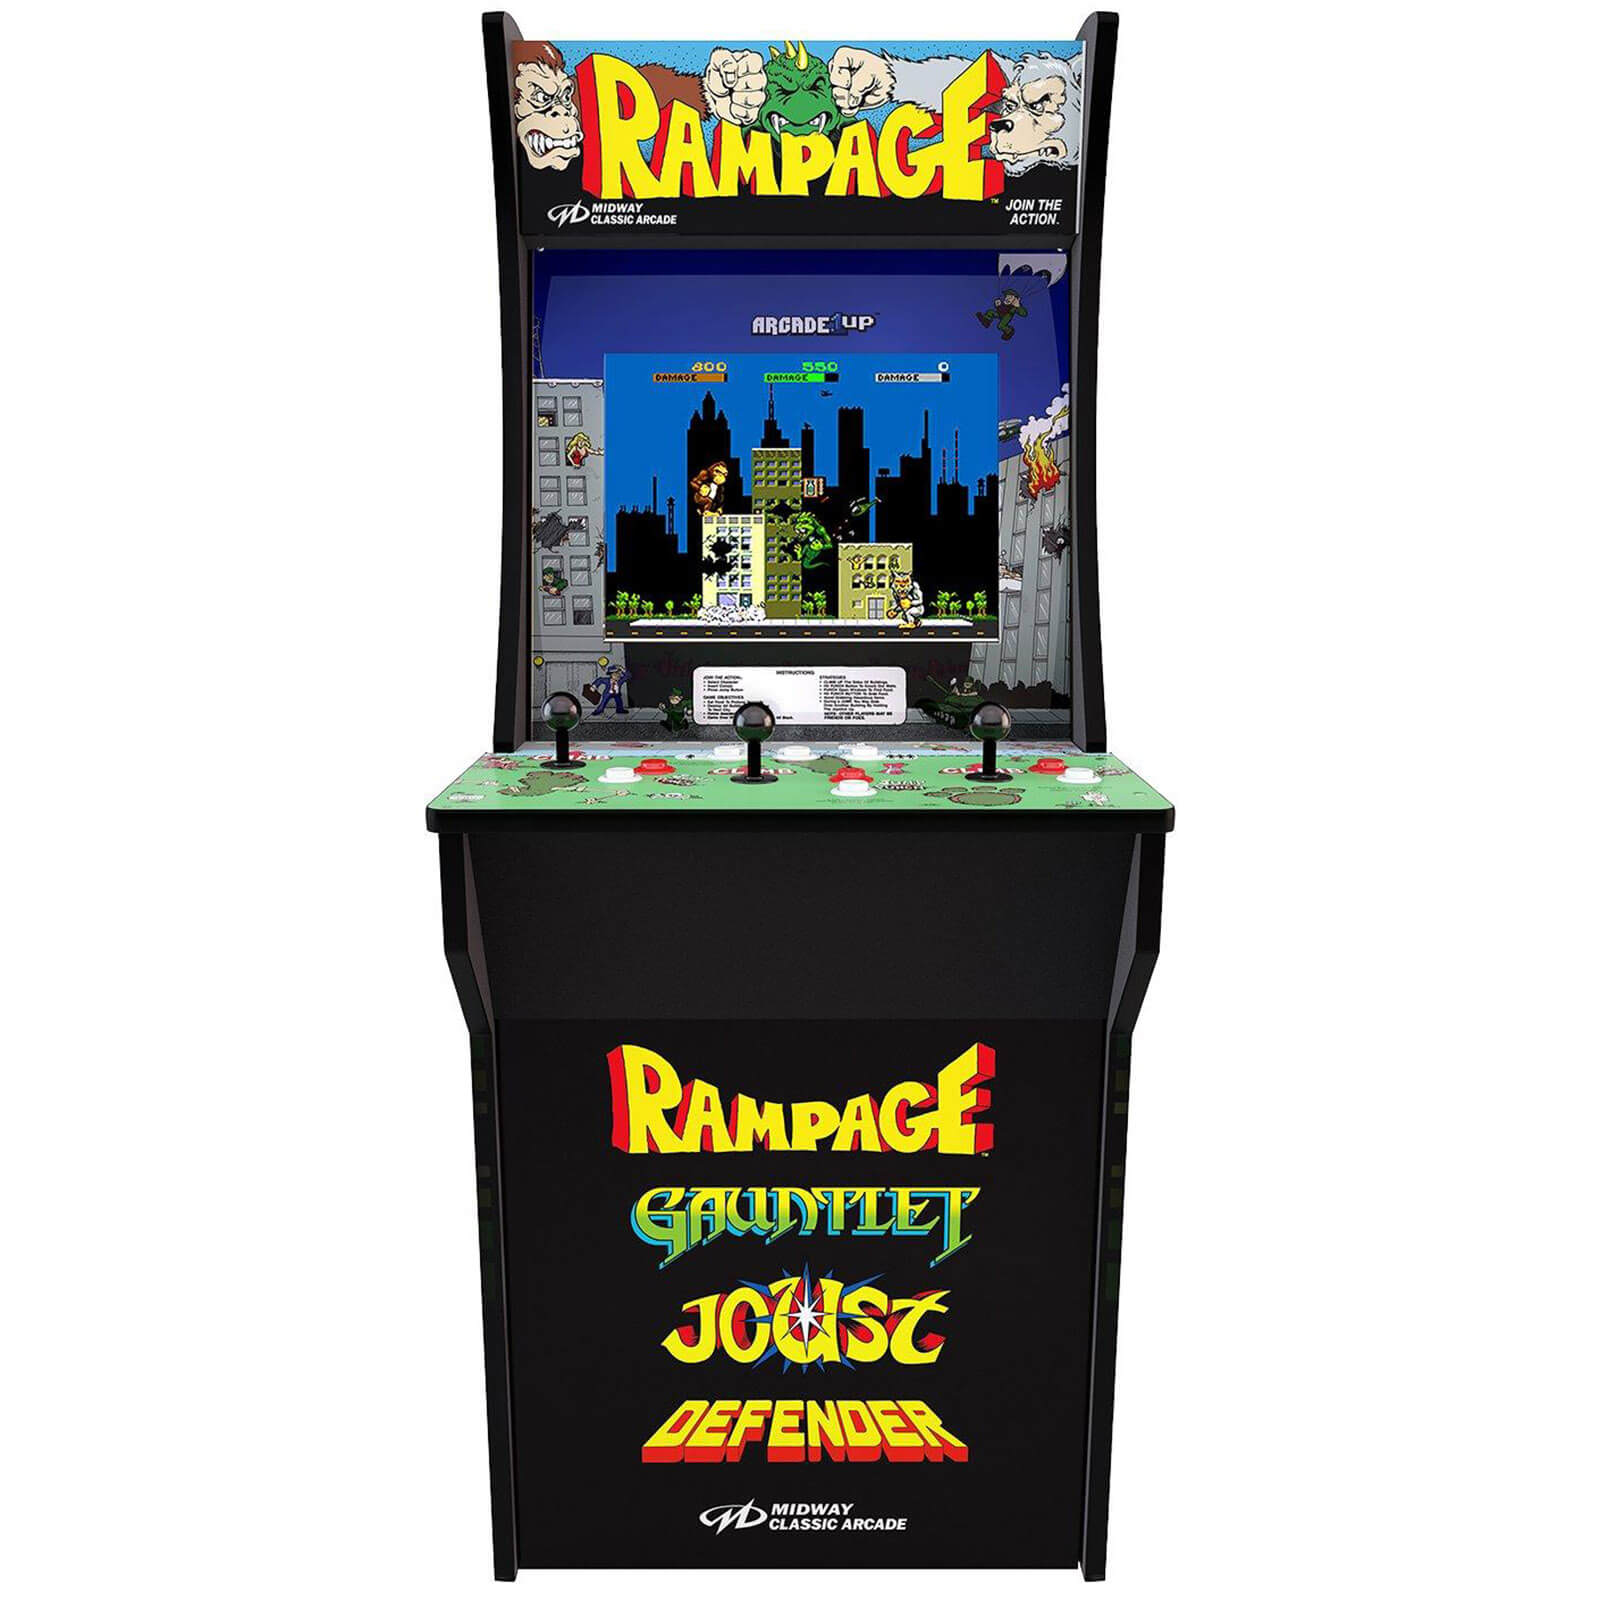 Sambro Arcade 1up Midway Rampage Gauntlet Joust Defender At